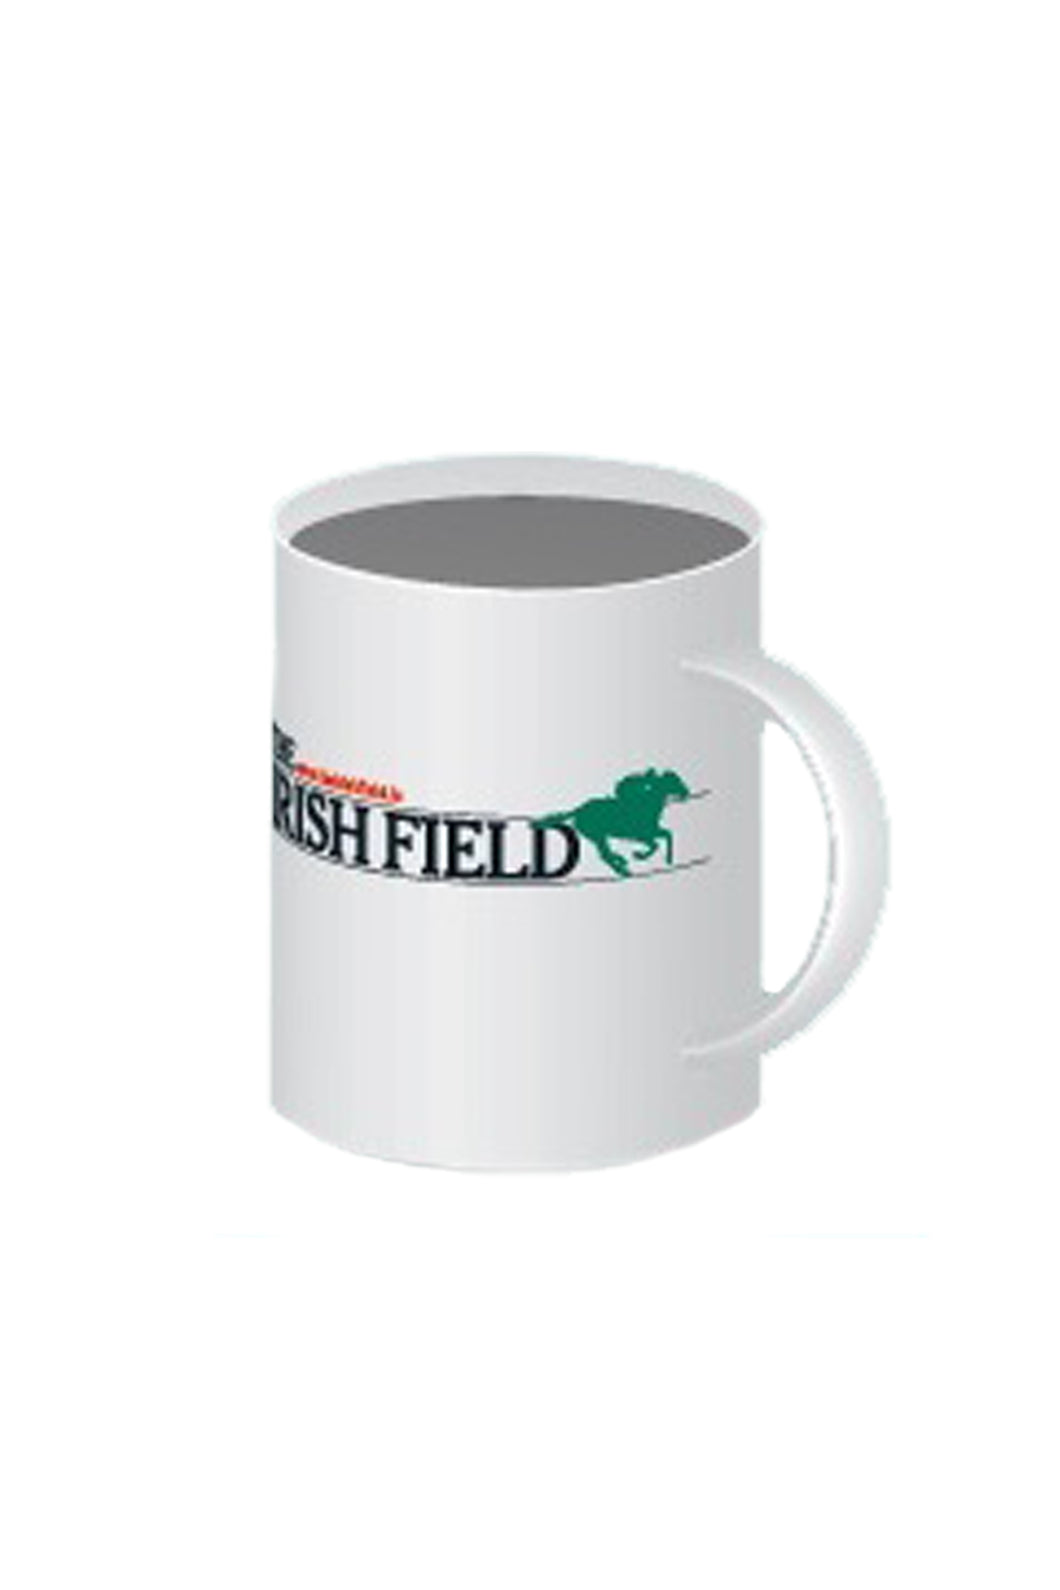 The Irish Field Mug